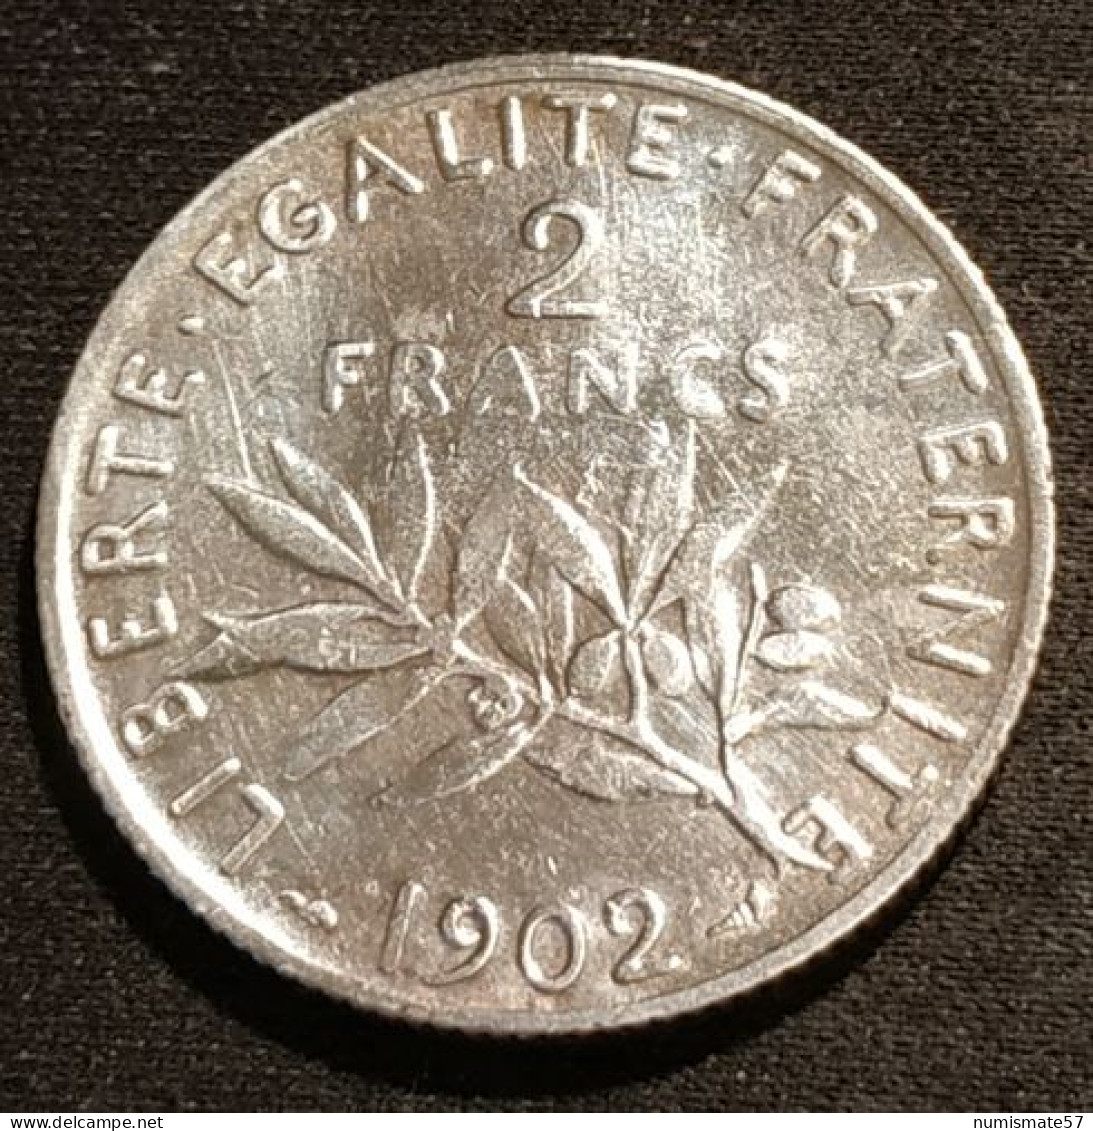 FRANCE - 2 FRANCS 1902 - Semeuse - Argent - Silver - Gad 532 - KM 845 - 2 Francs